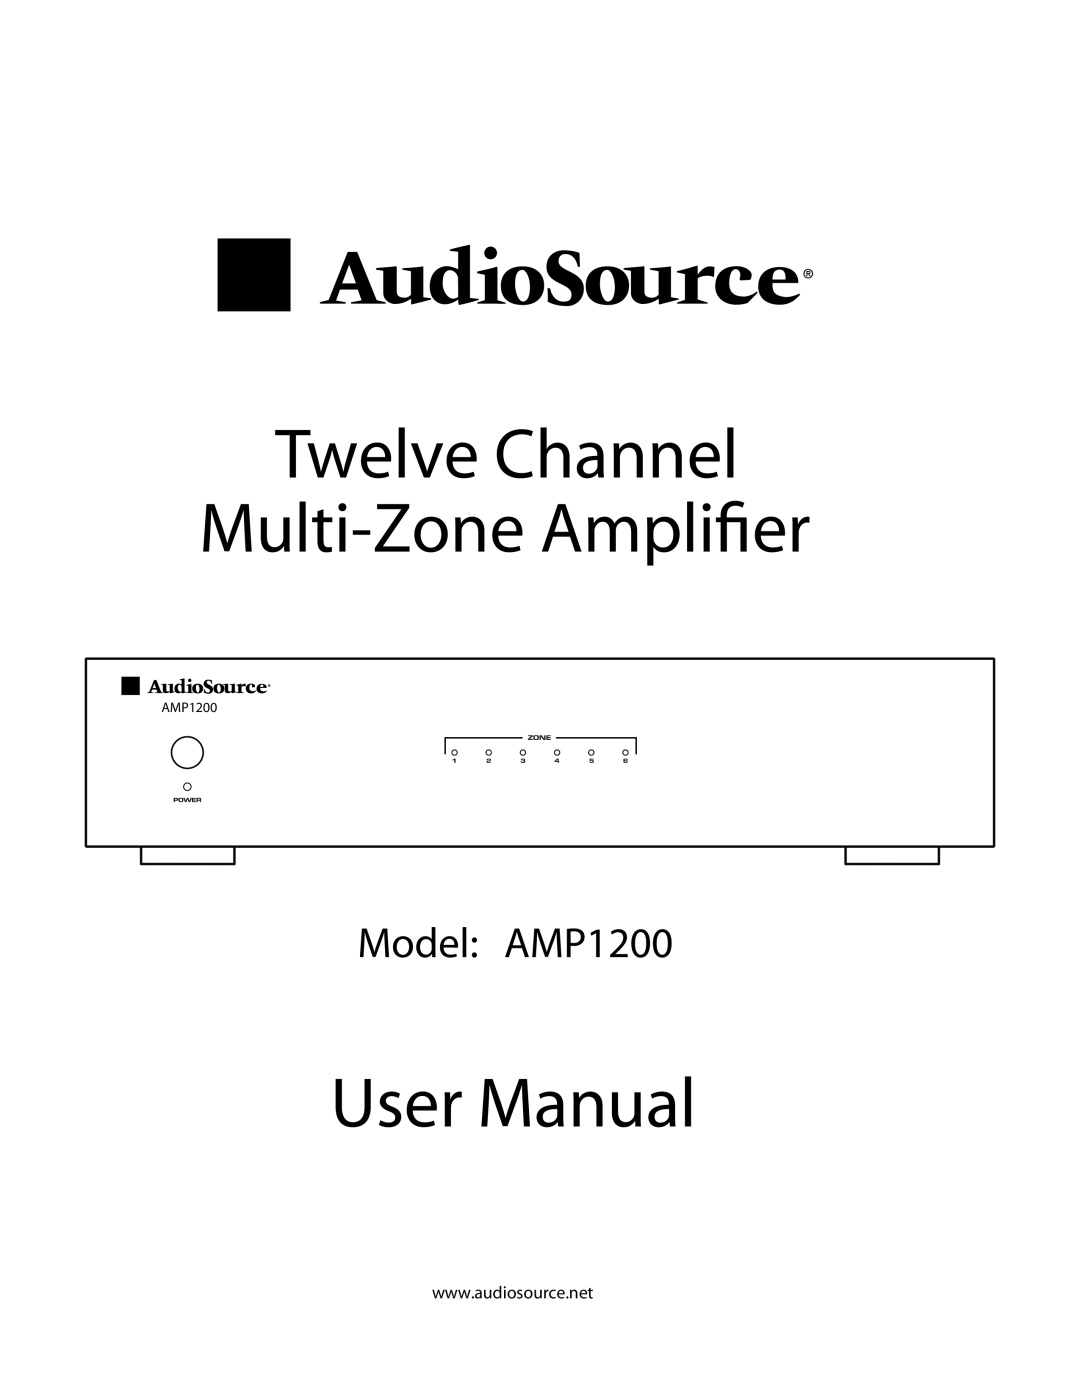 AudioSource user manual Twelve Channel Multi-ZoneAmpliﬁer, Model AMP1200 